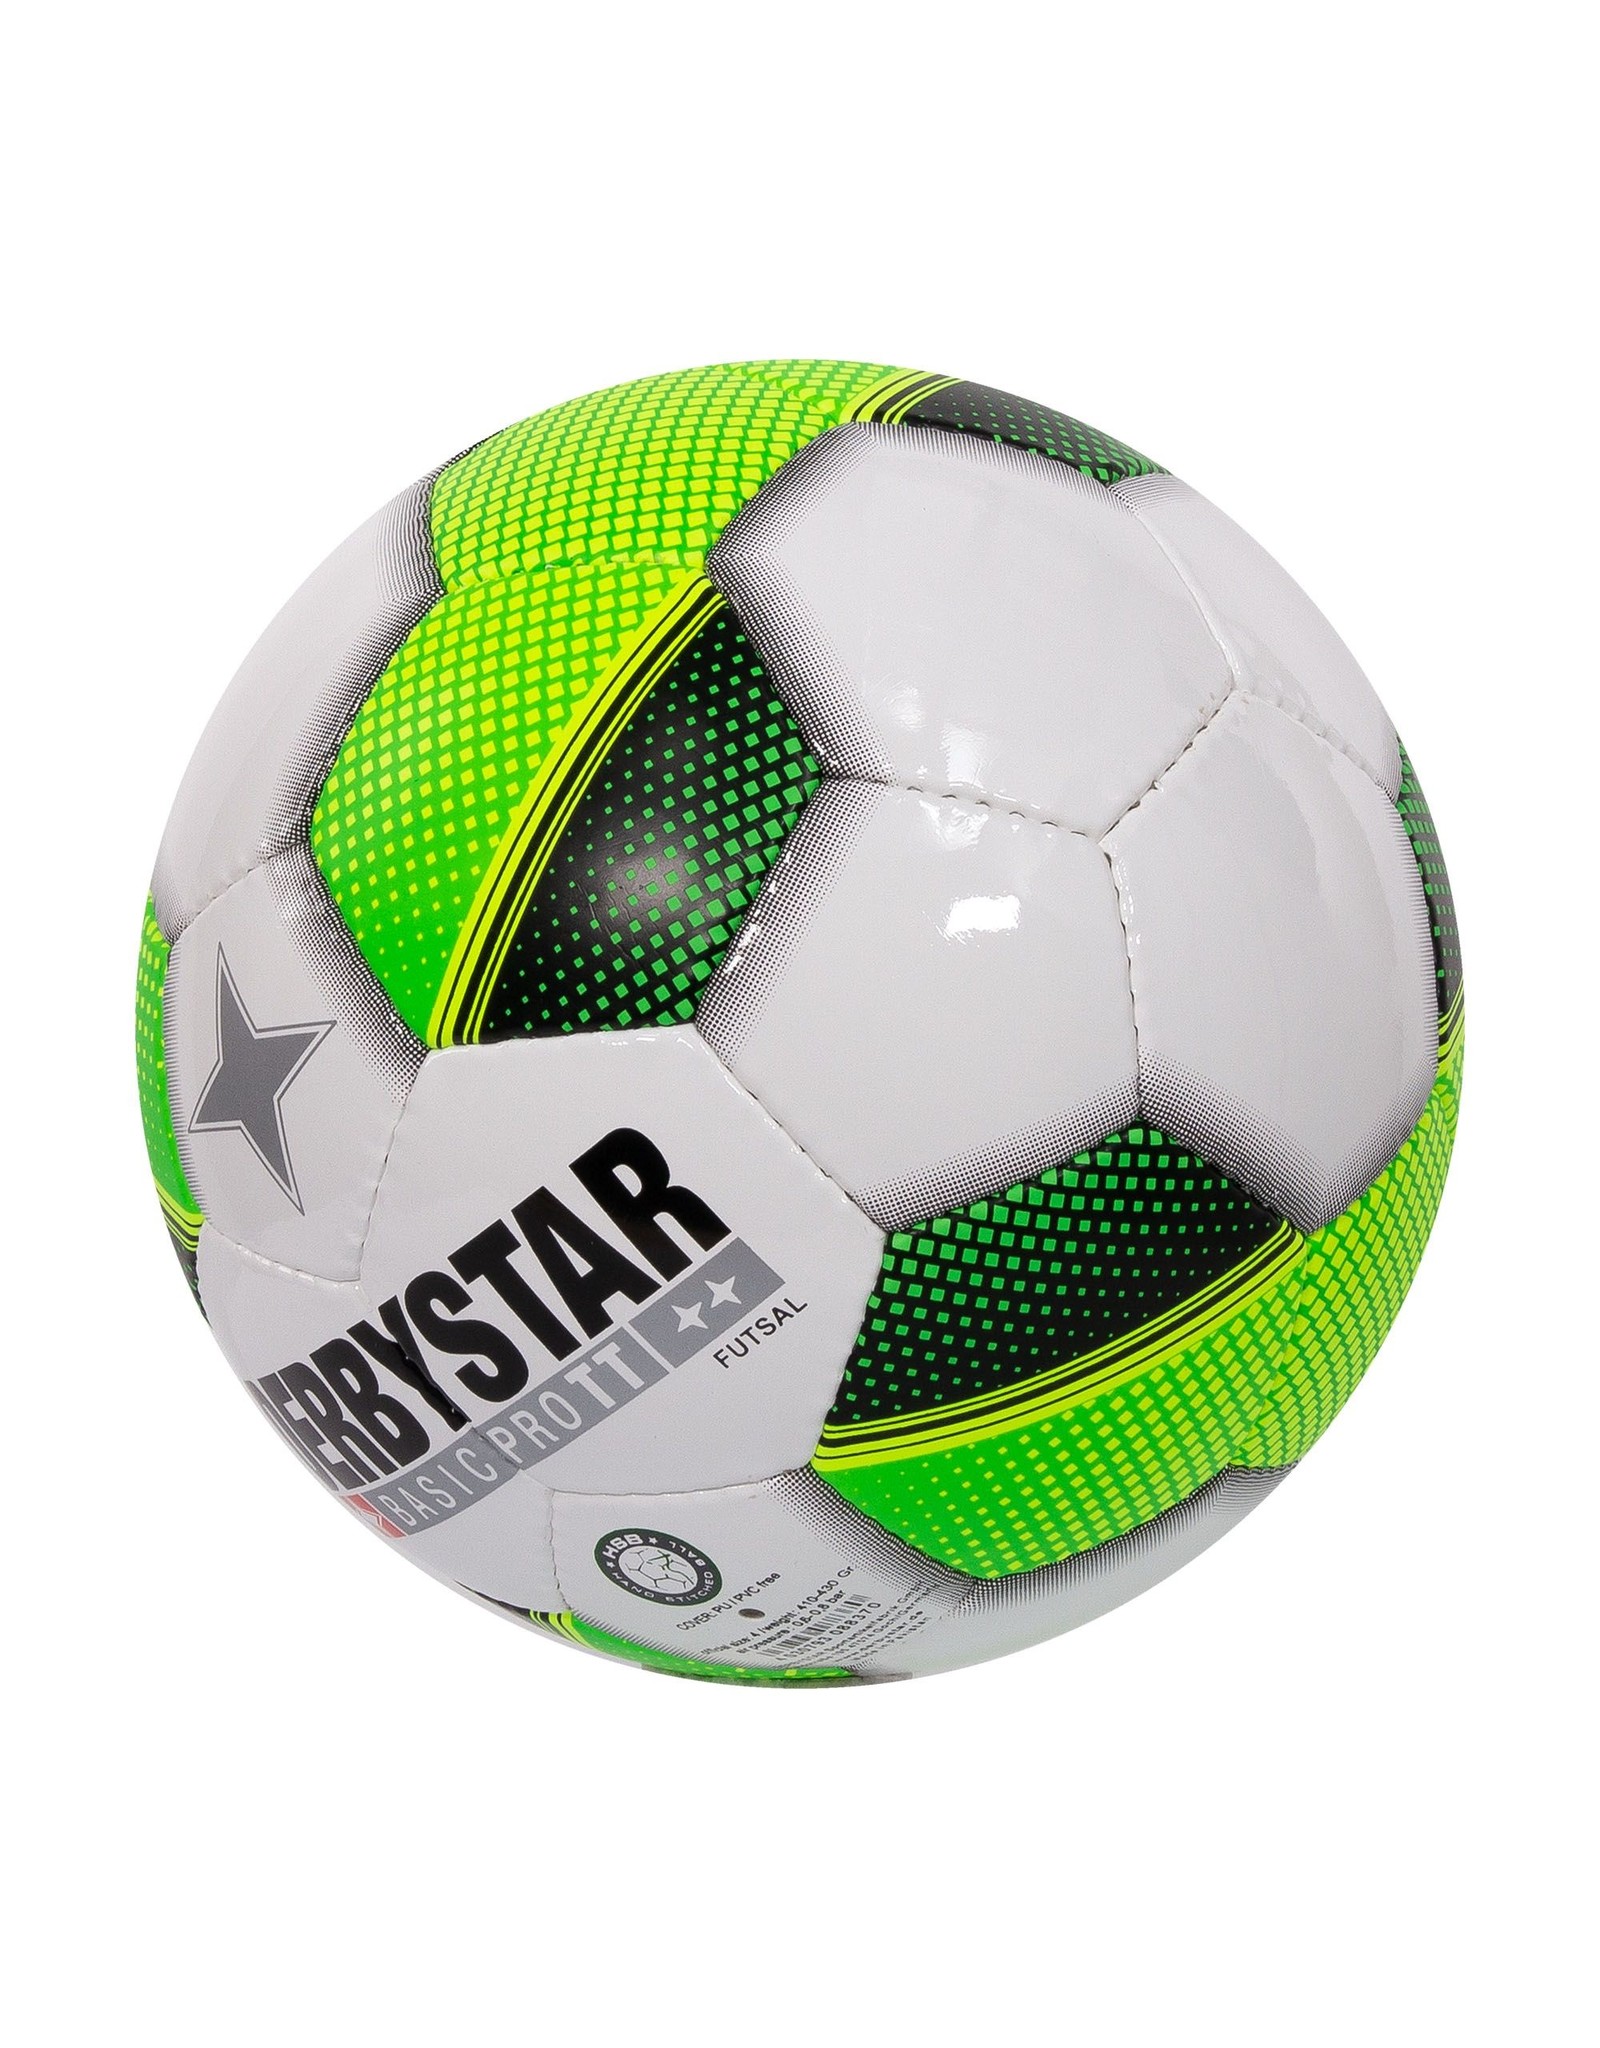 Derbystar Futsal Basic Pro TT-White-Green